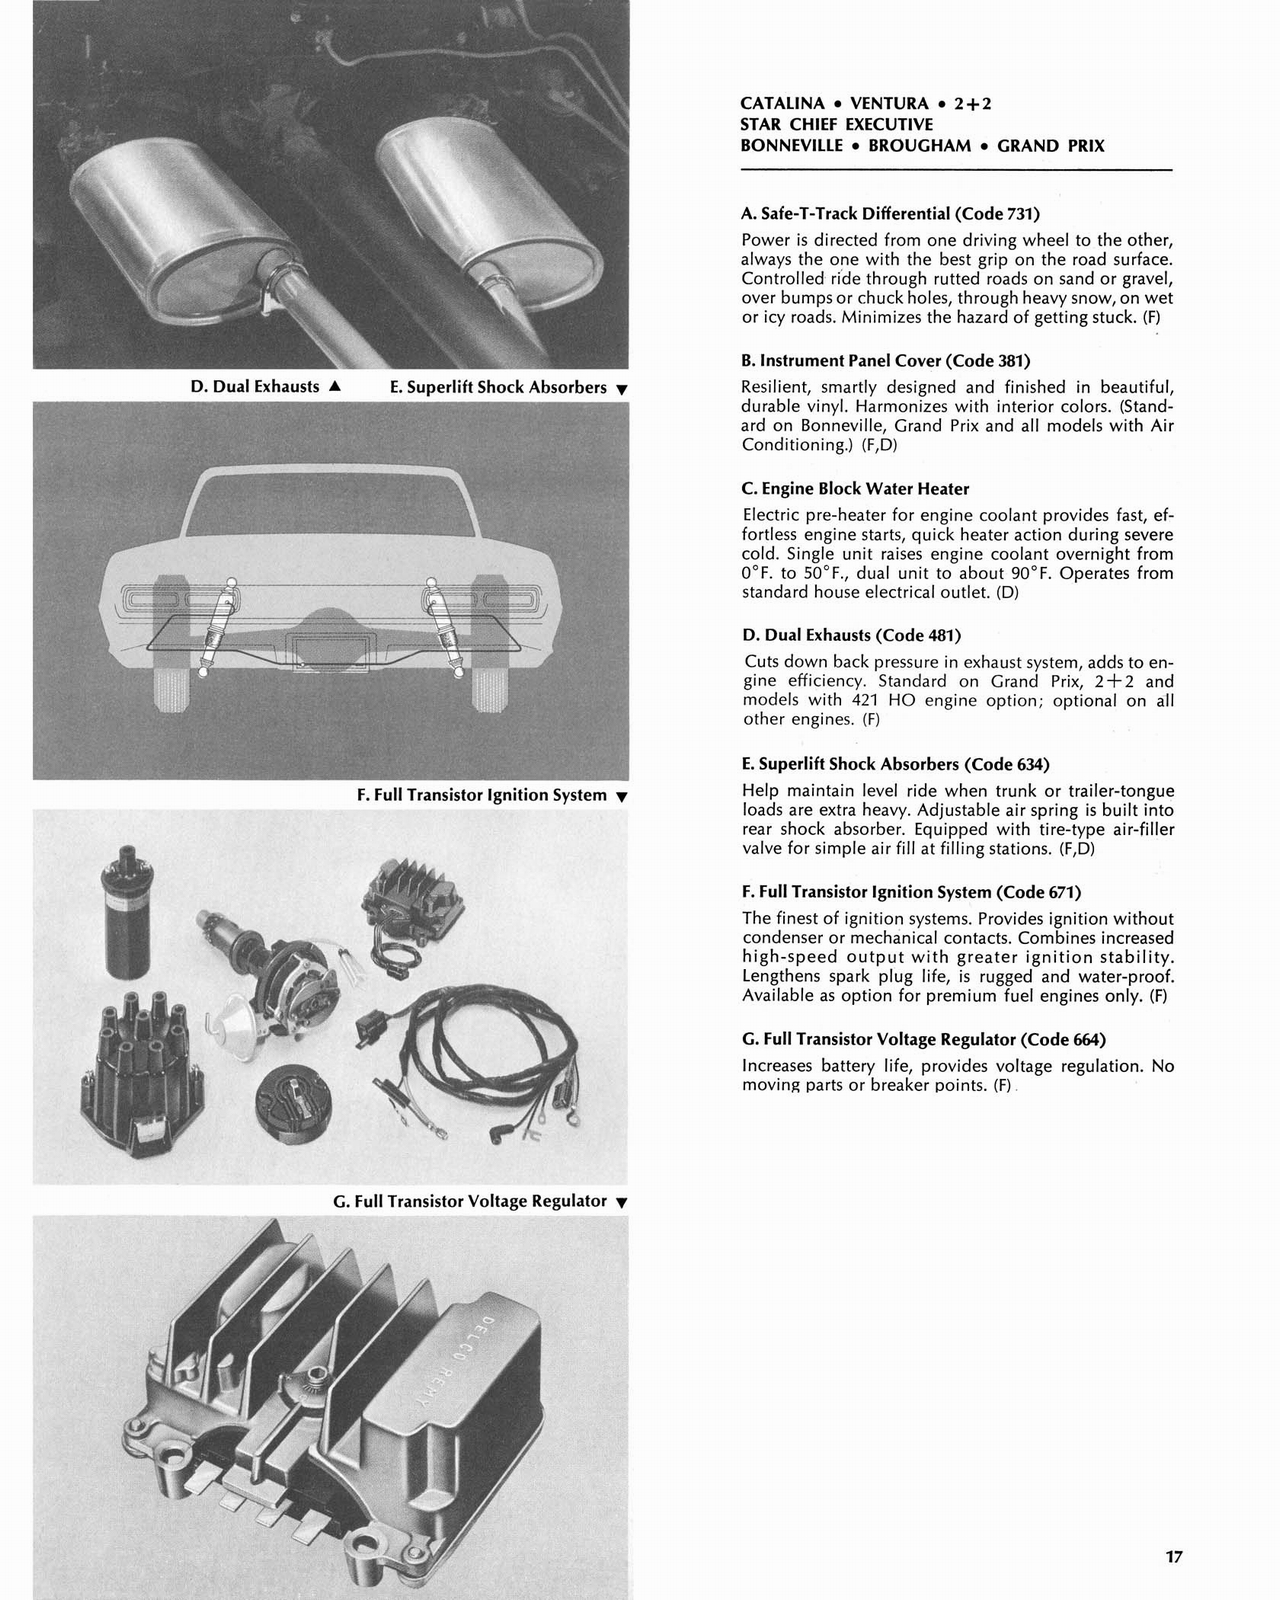 n_1966 Pontiac Accessories Catalog-17.jpg